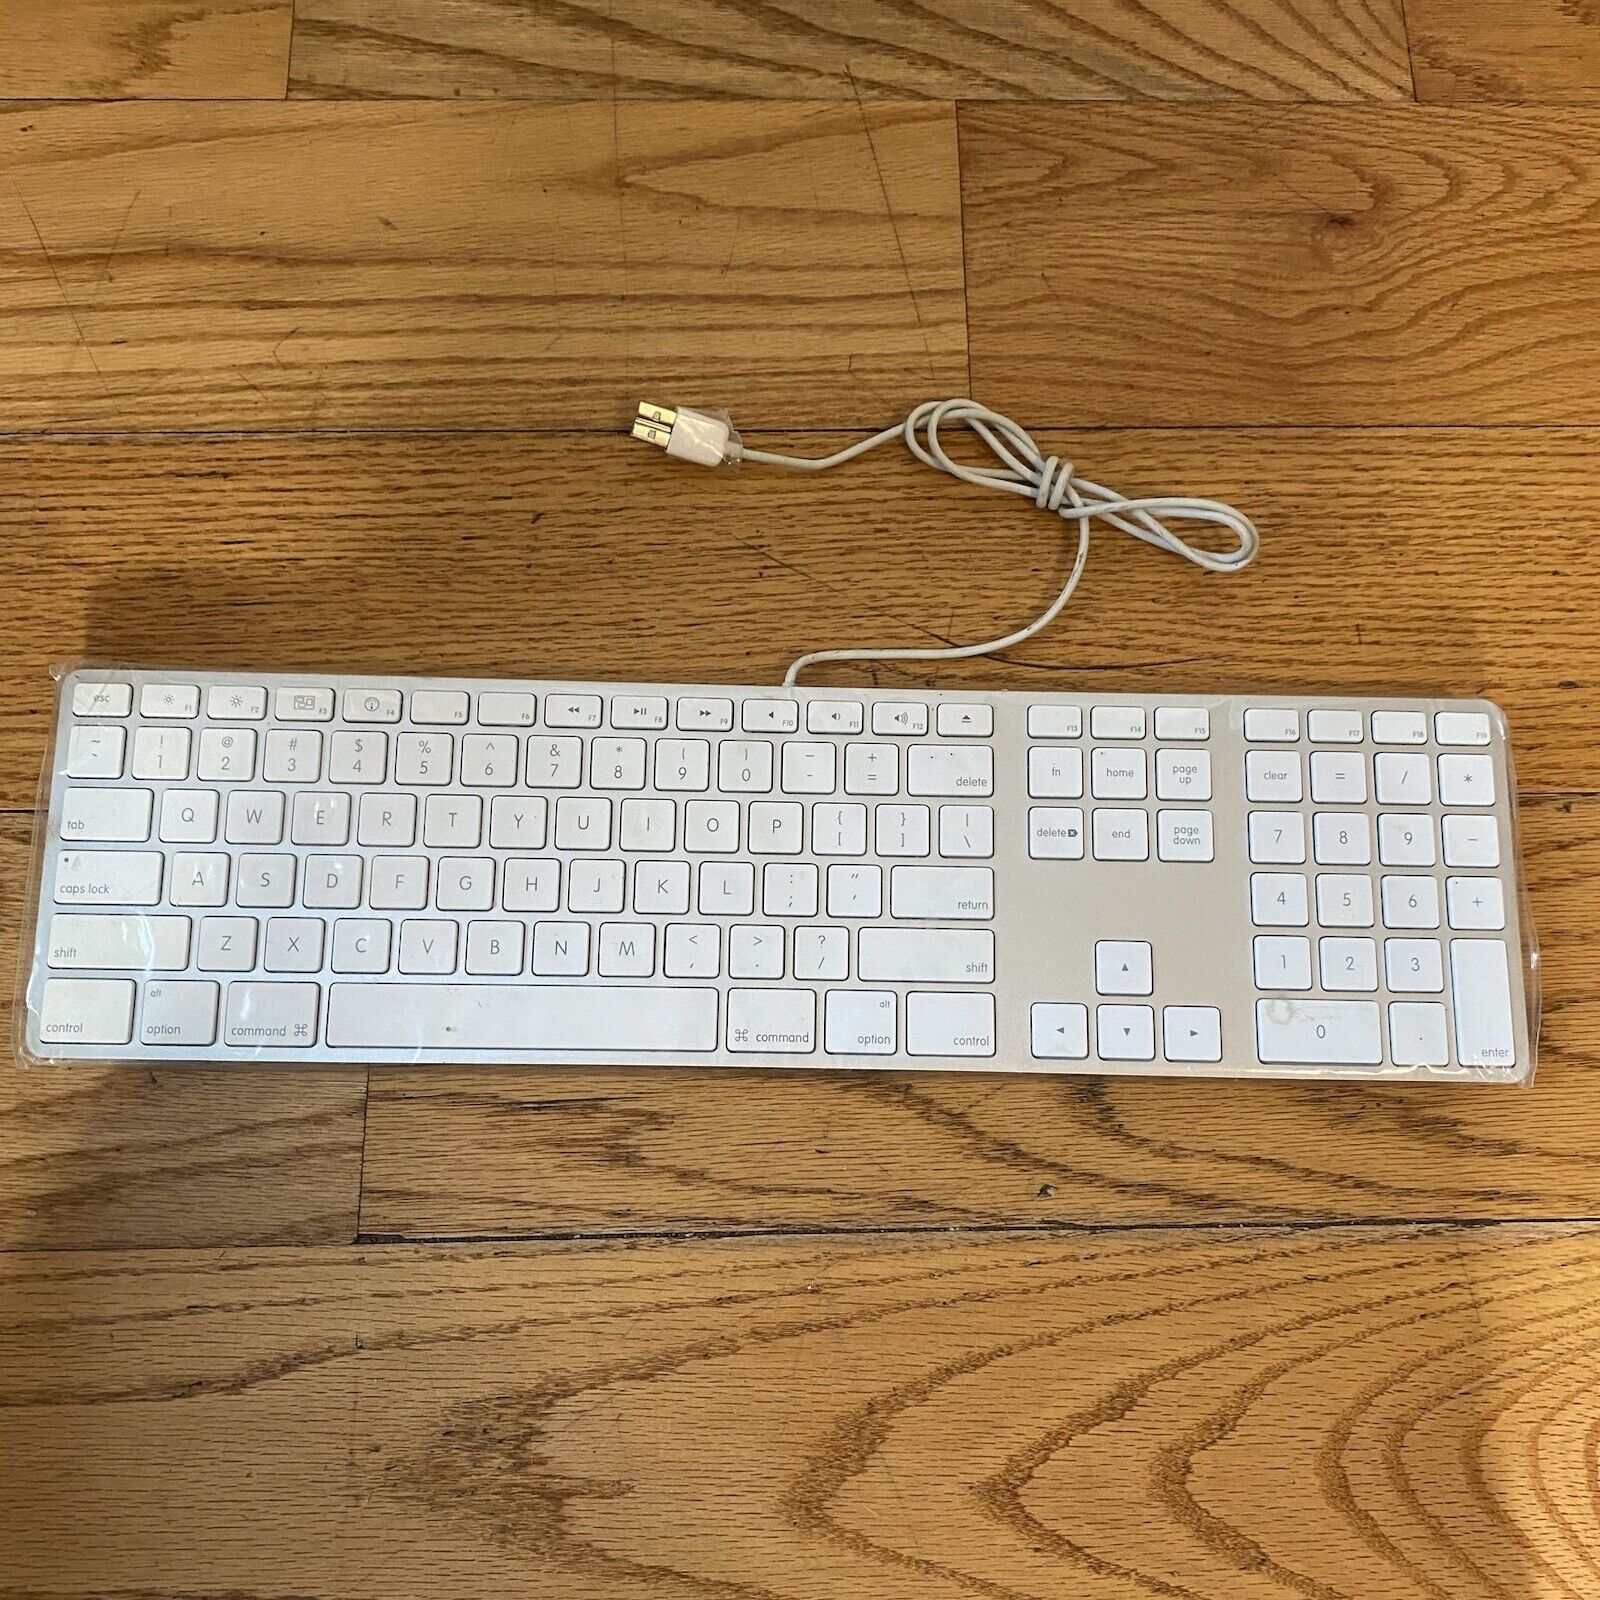 Apple A1243 USB Port x2 Wired Keyboard Numeric Keypad New Still In Wrapper